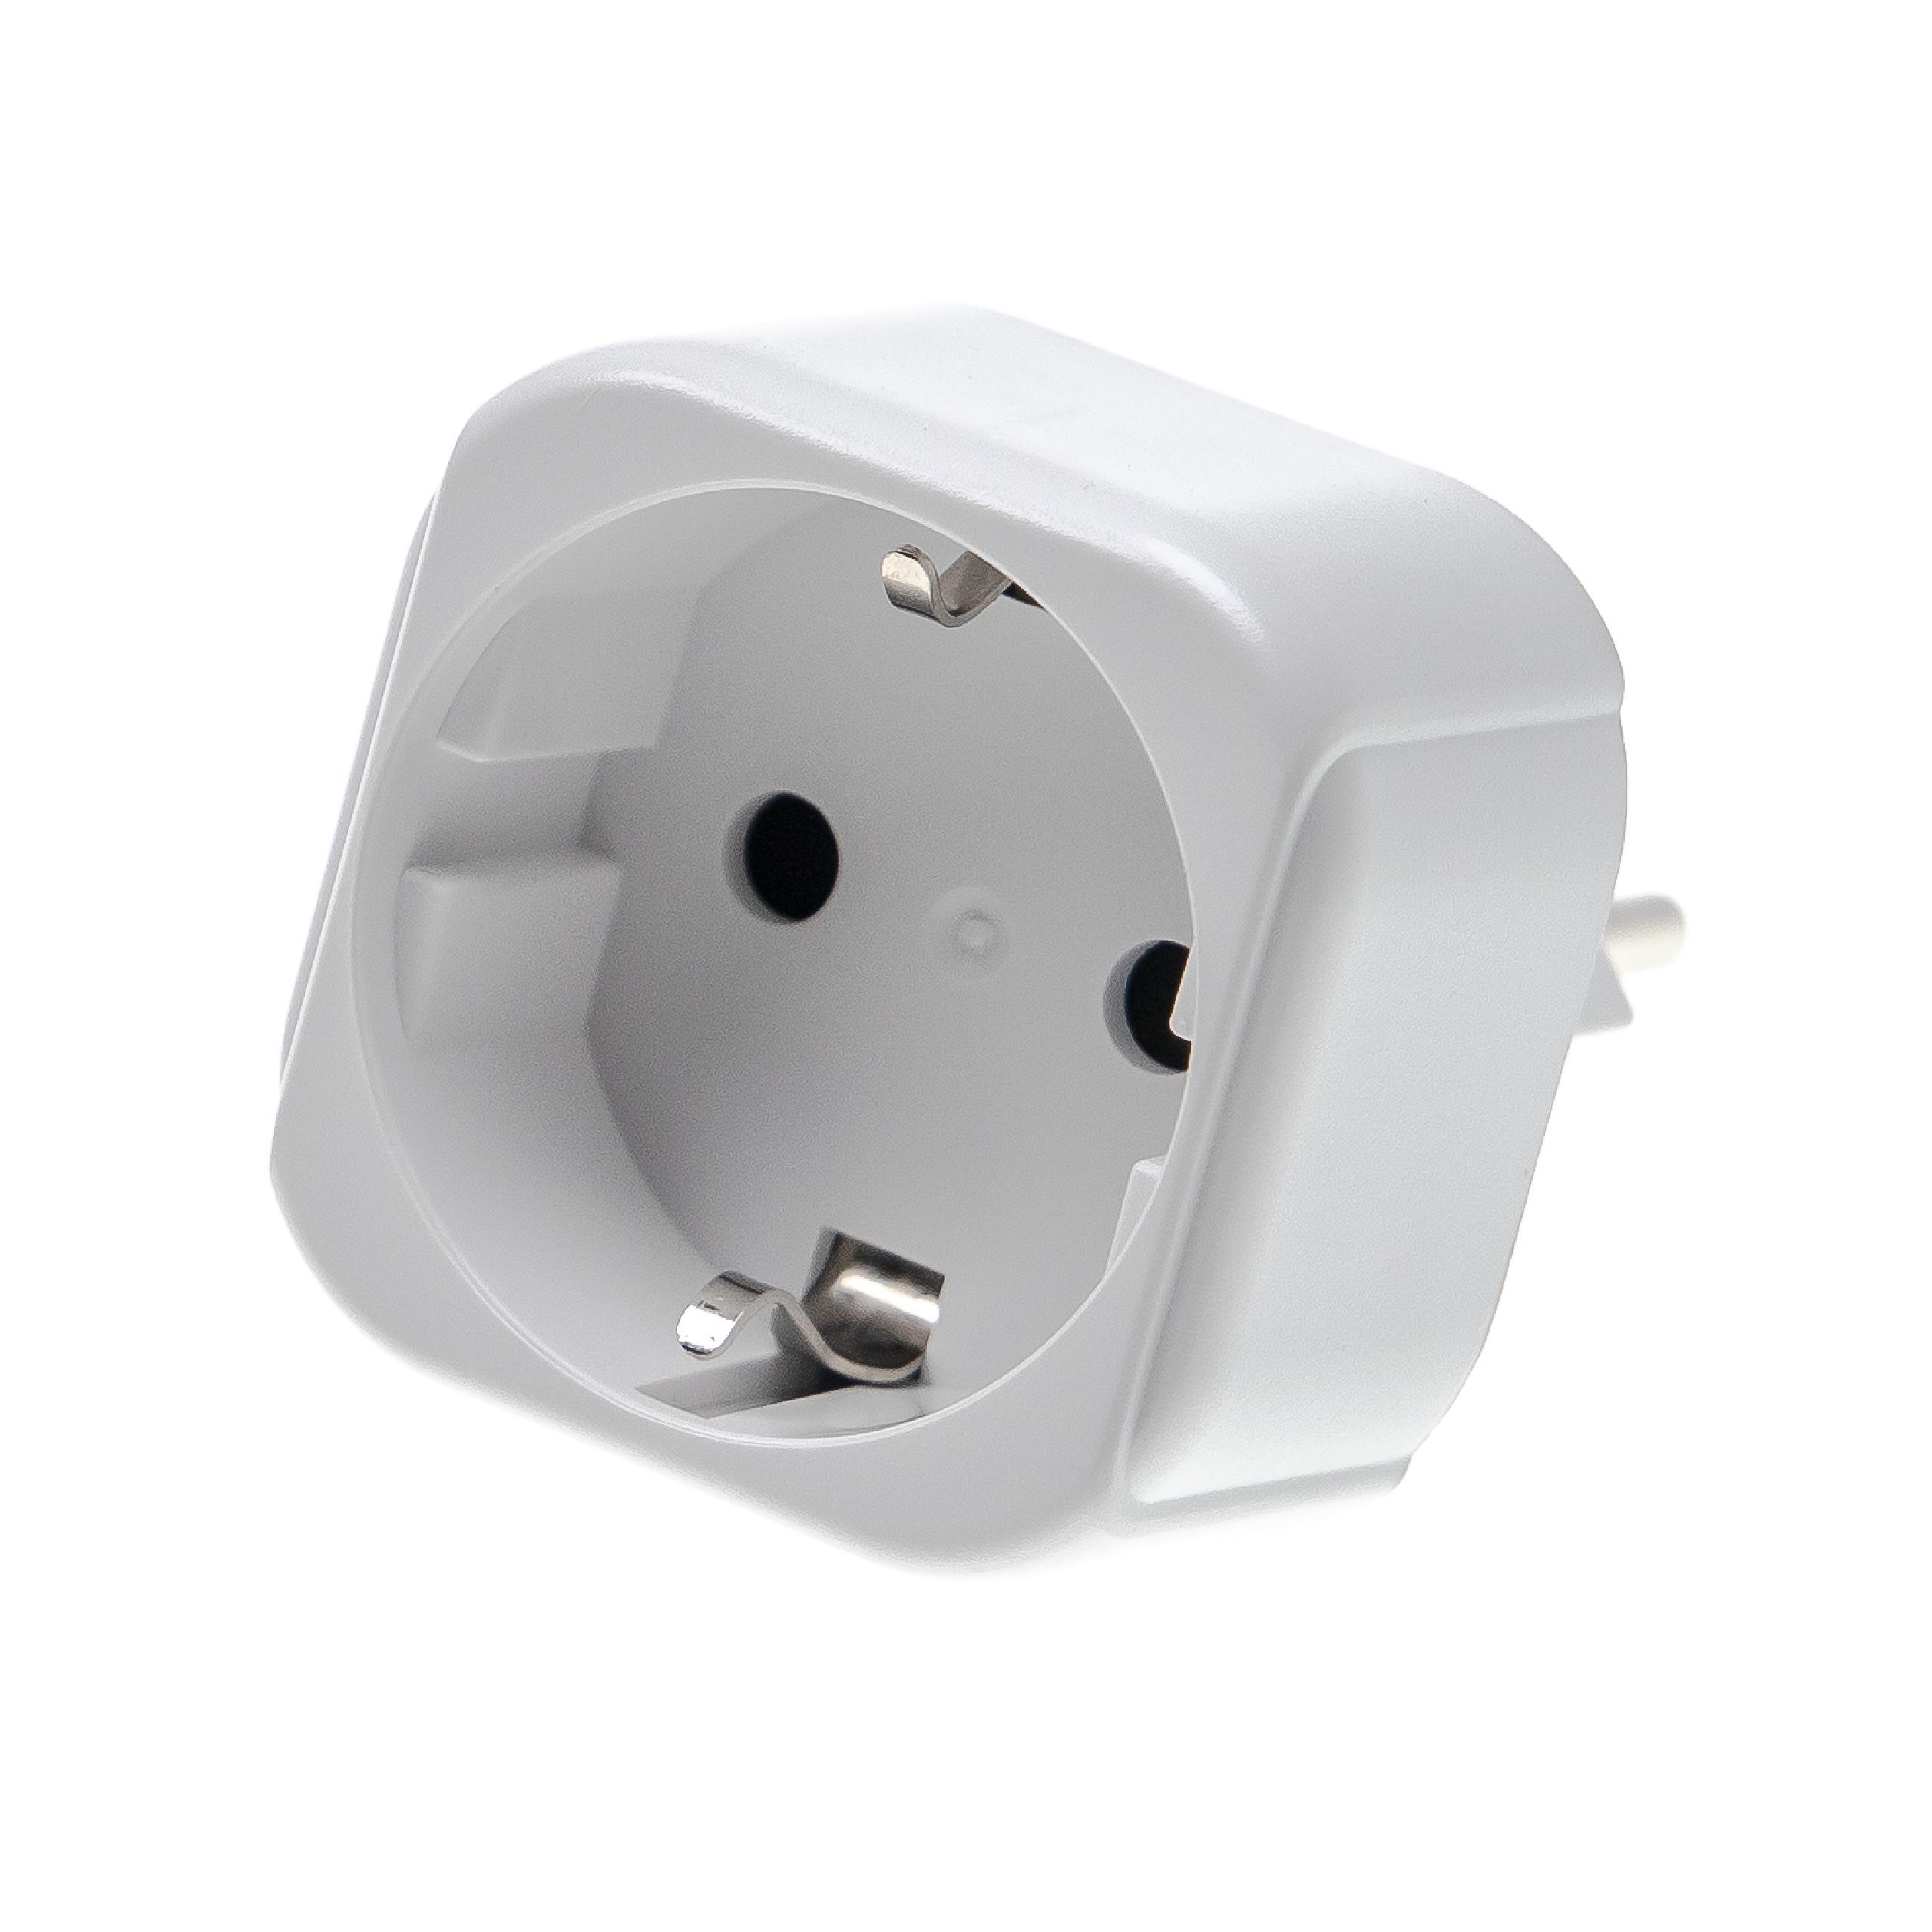 vhbw Travel Adapter Type J, SN 441011 (Swiss plug to EU socket) - Travel Adapter White, max. 250 V / 2500 W